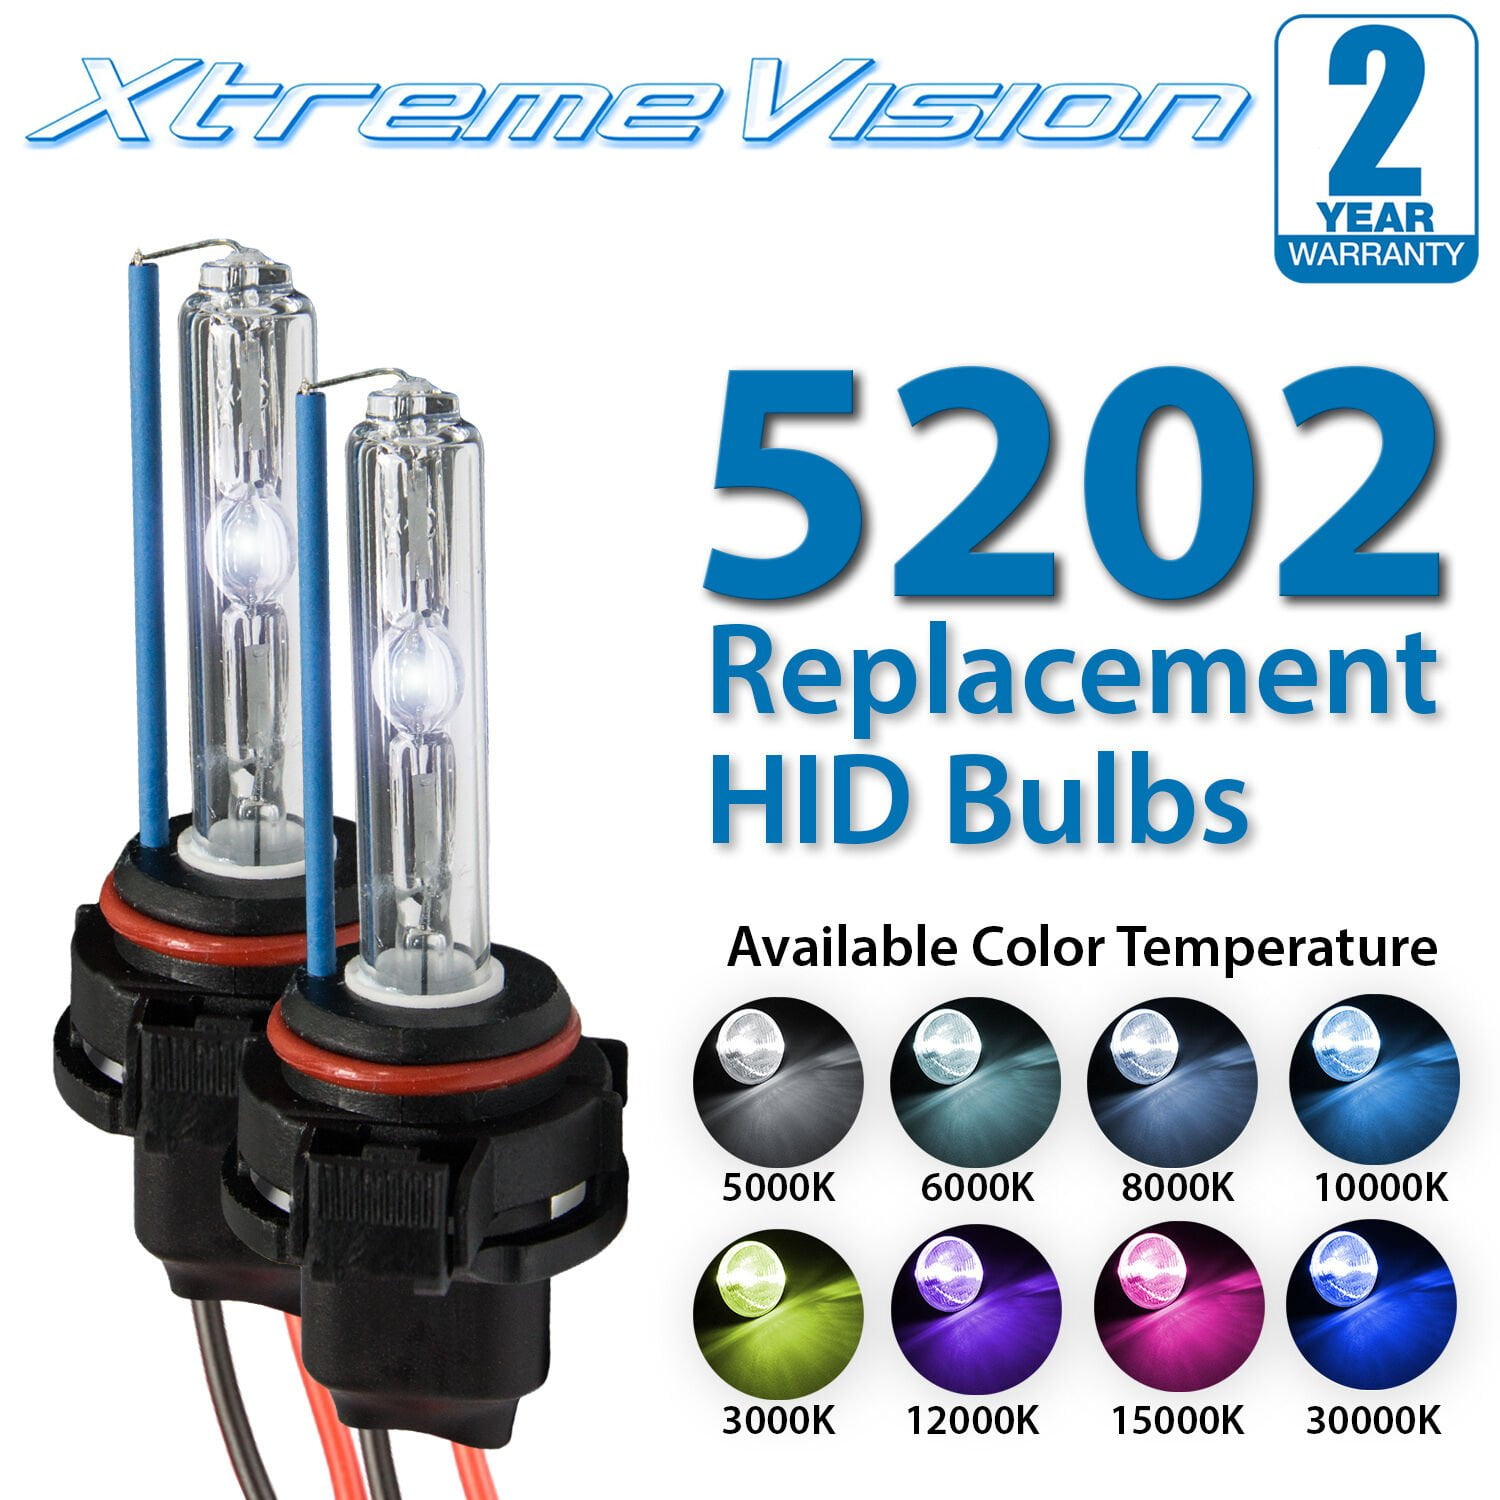 5202 HID Xenon Replacement Bulbs 5000K 6000K 8000K 10000K Walmart.com